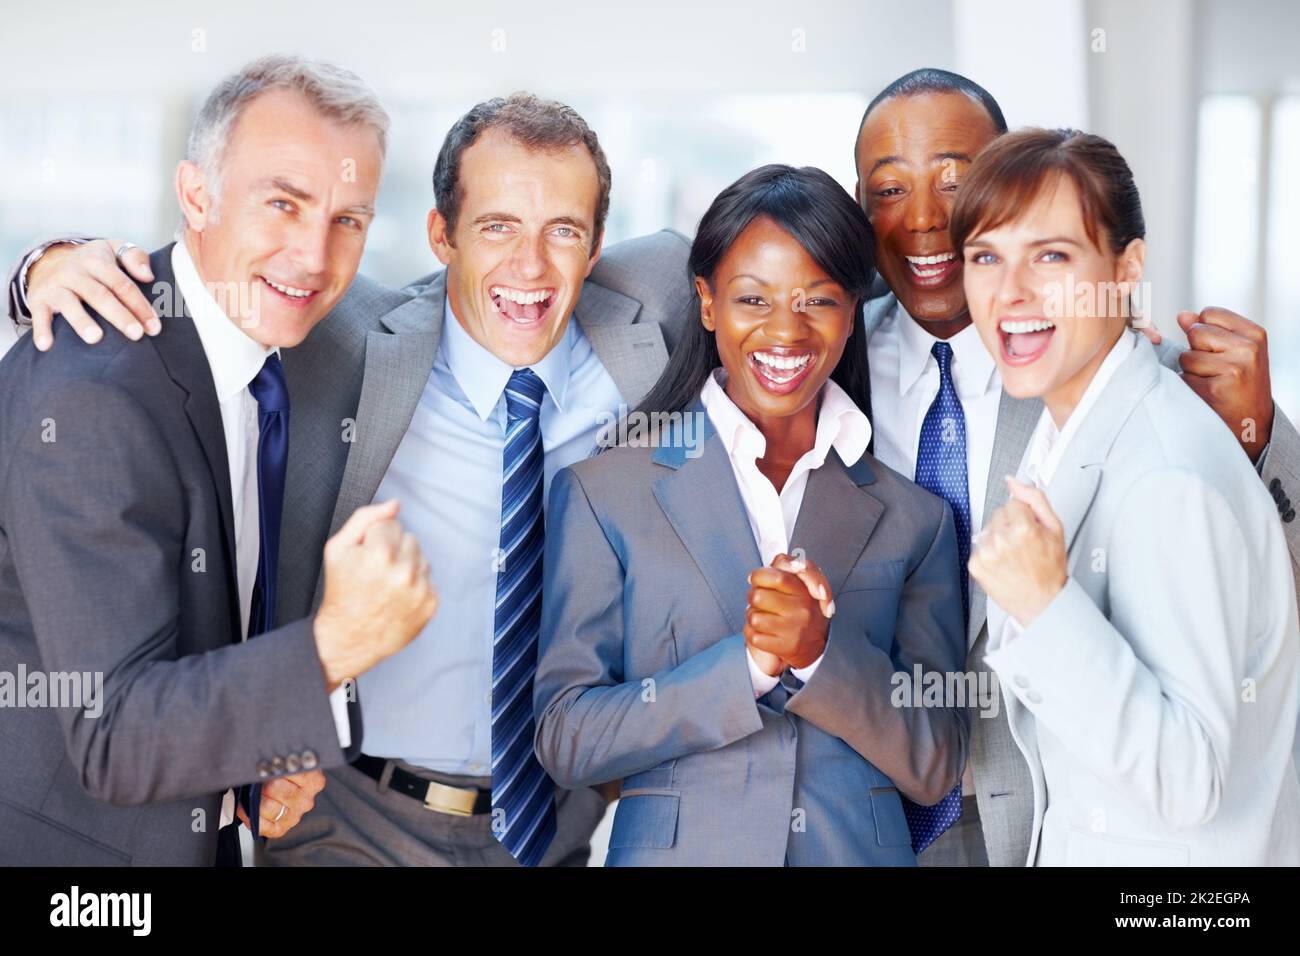 Multi ethnic business people celebrating success. Portrait of multi ethnic business people celebrating success. Stock Photo